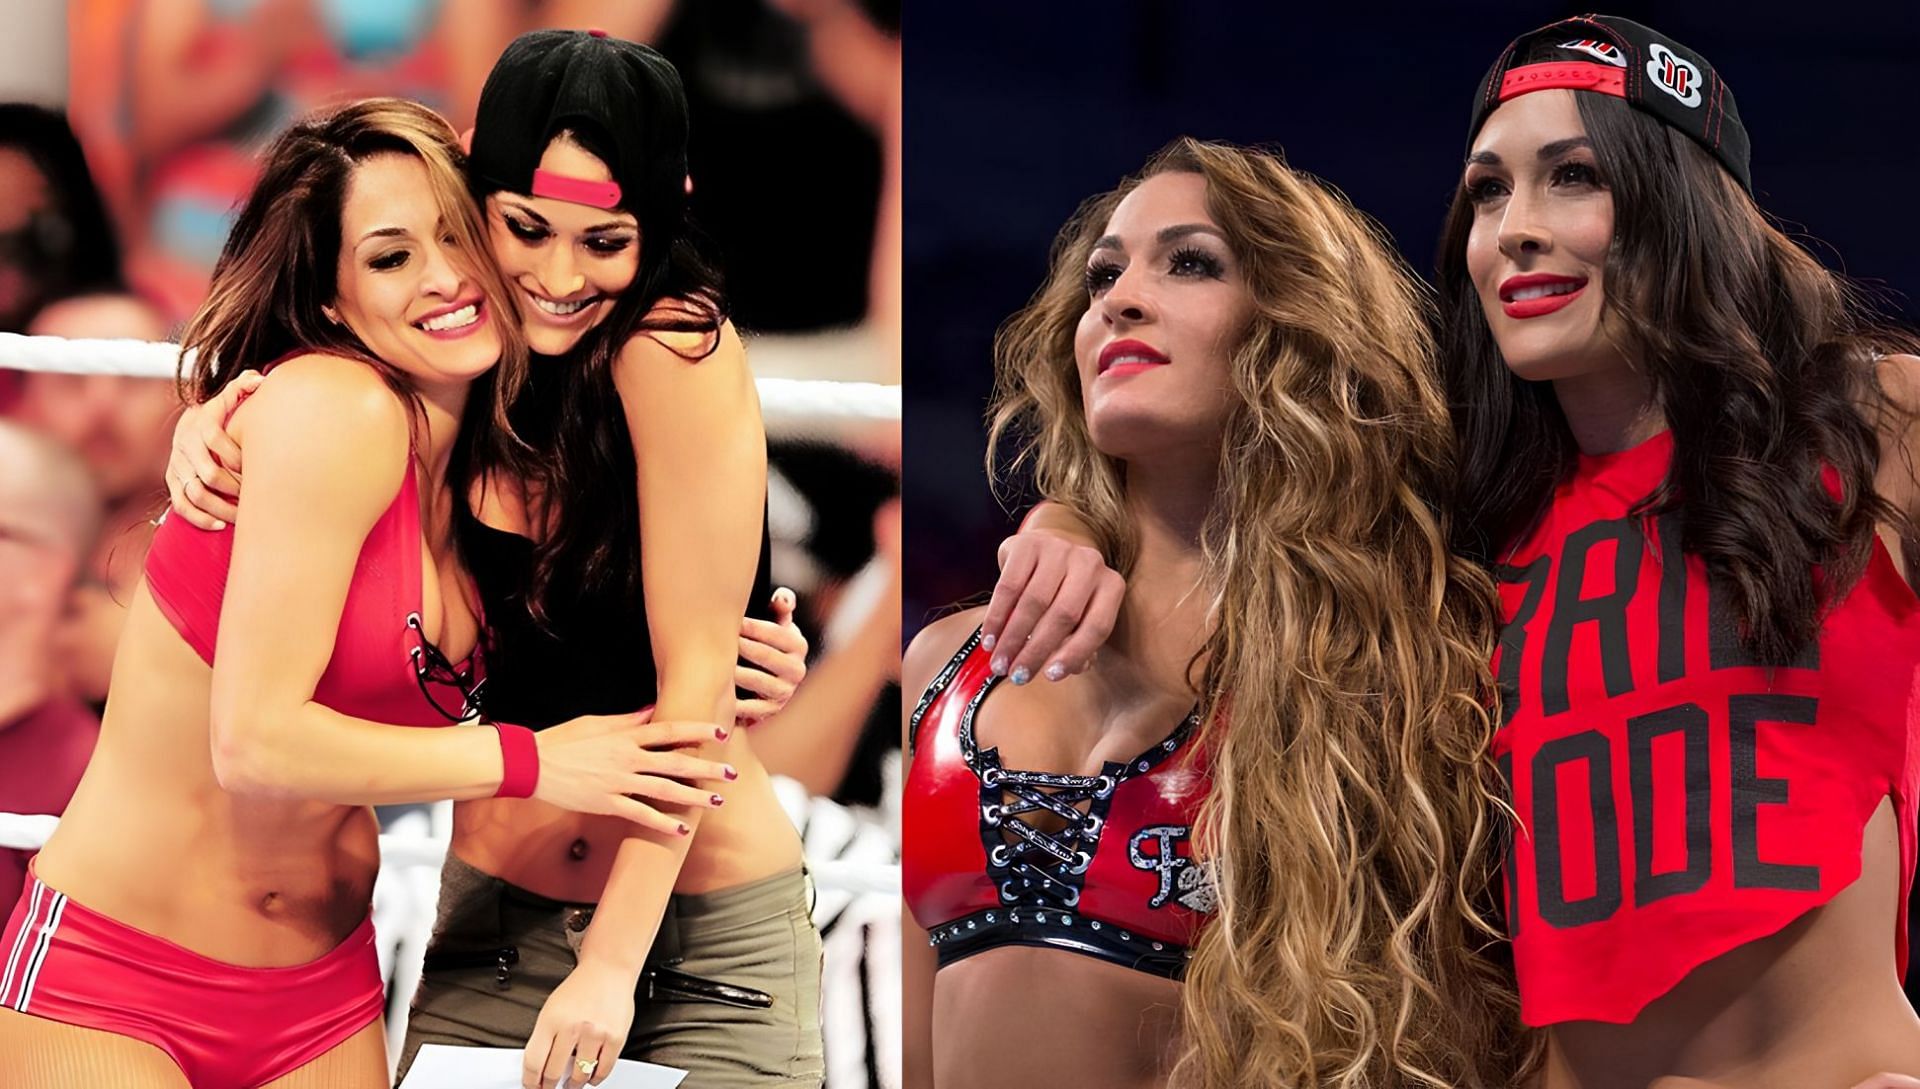 Nikki Bella and Brie Bella are former WWE Superstars